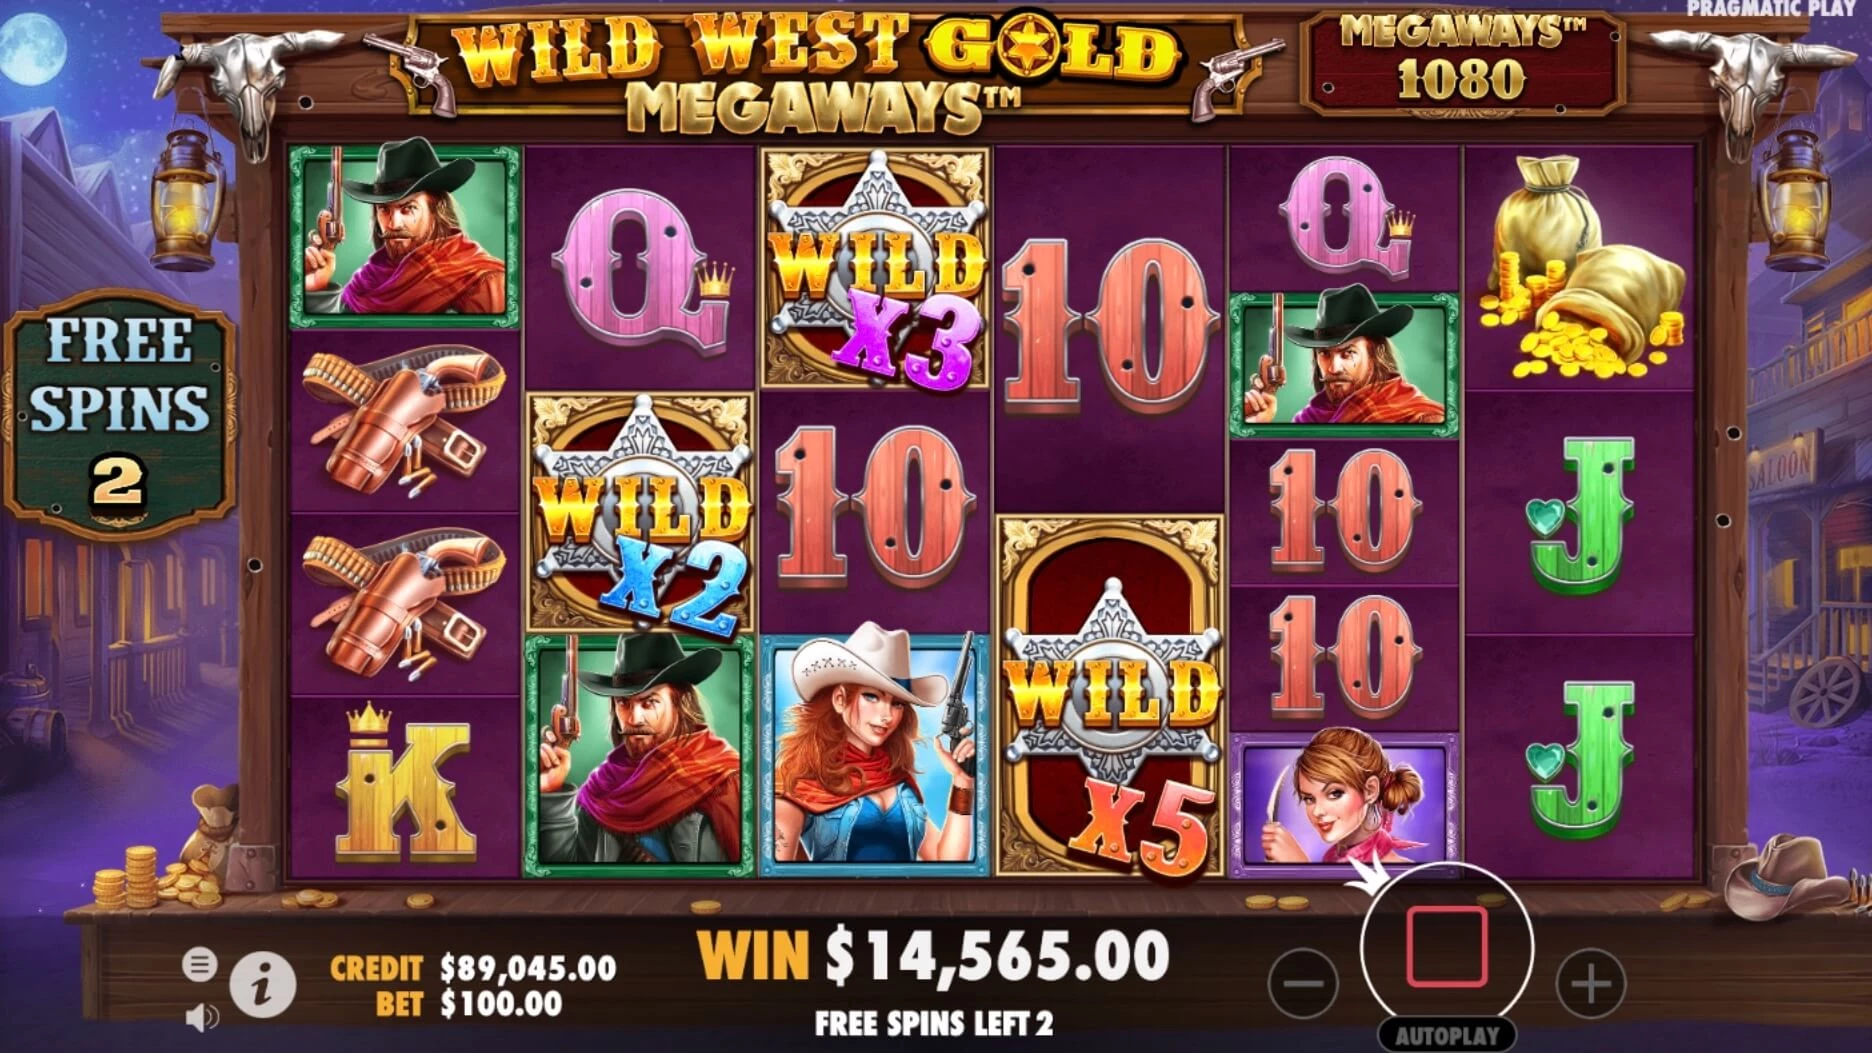 Wild West Gold Megaways win four